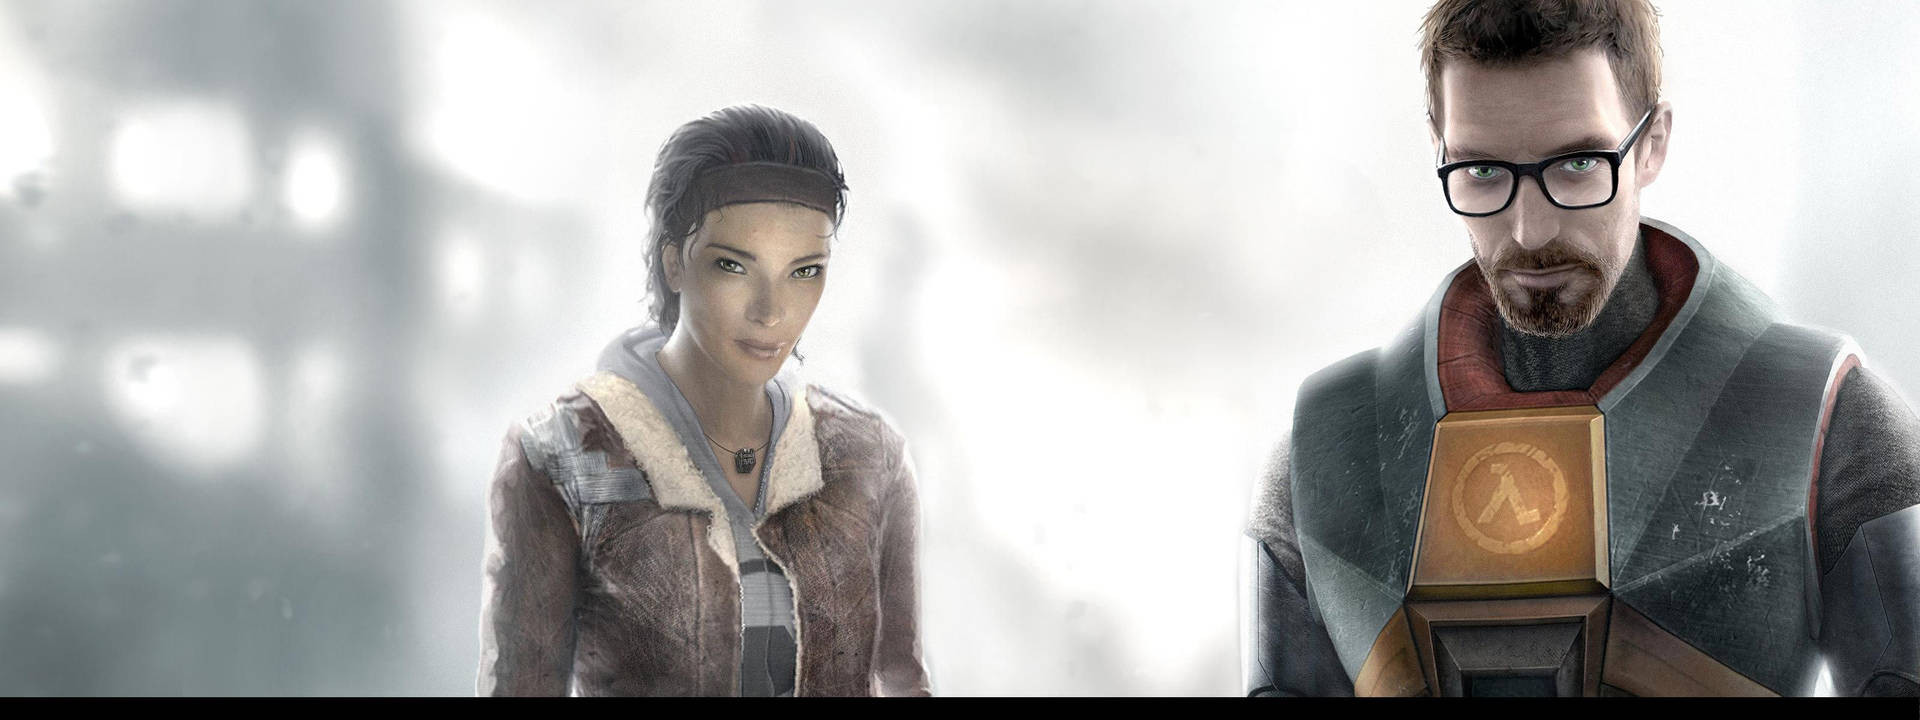 Unyielding Heroes Of Half-life - Gordon Freeman And Alyx Vance Background